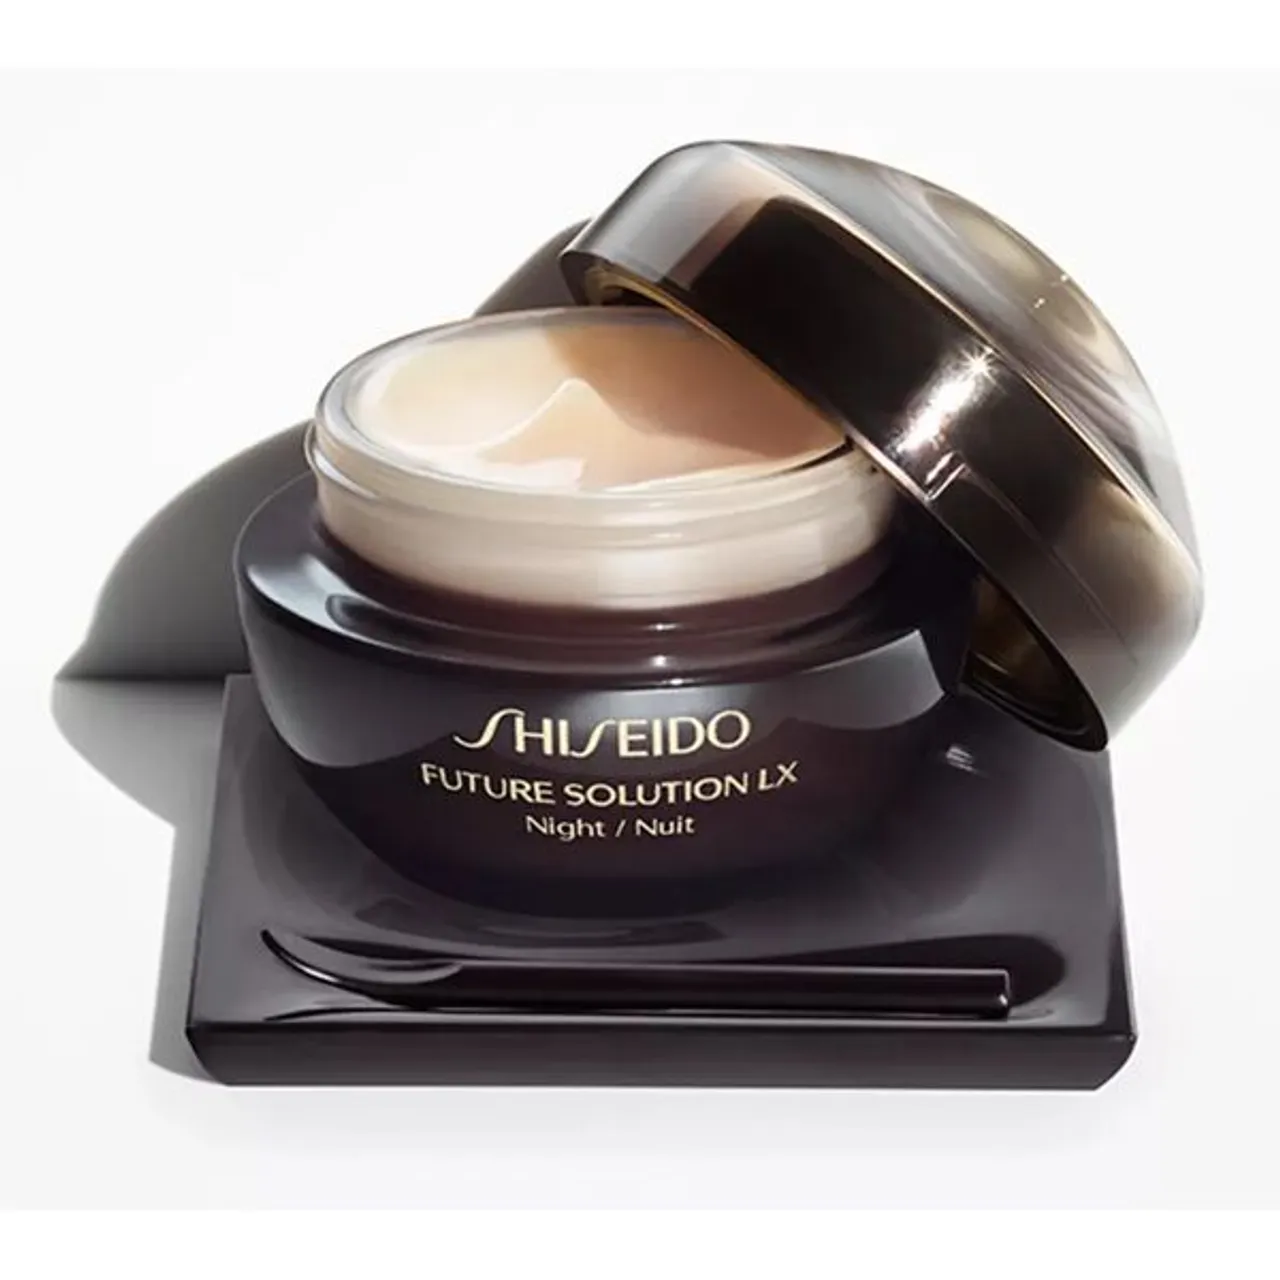 Shiseido Future Solution LX Total Regenerating Night Cream Cream, 50ml - Unisex - Size: 50ml